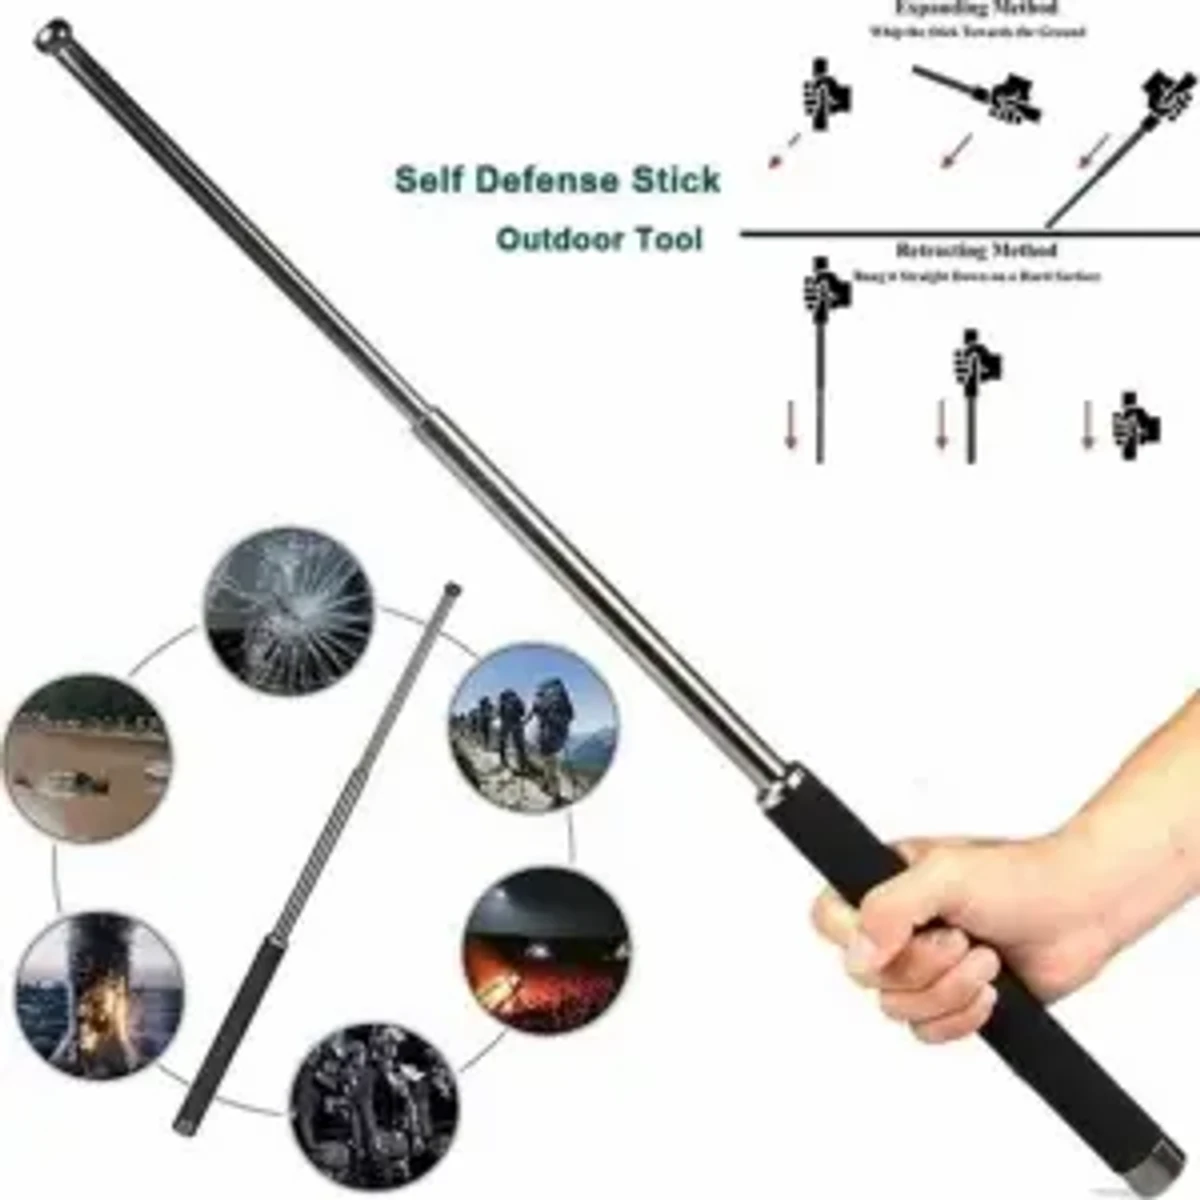 Self Defense Extendable Stick